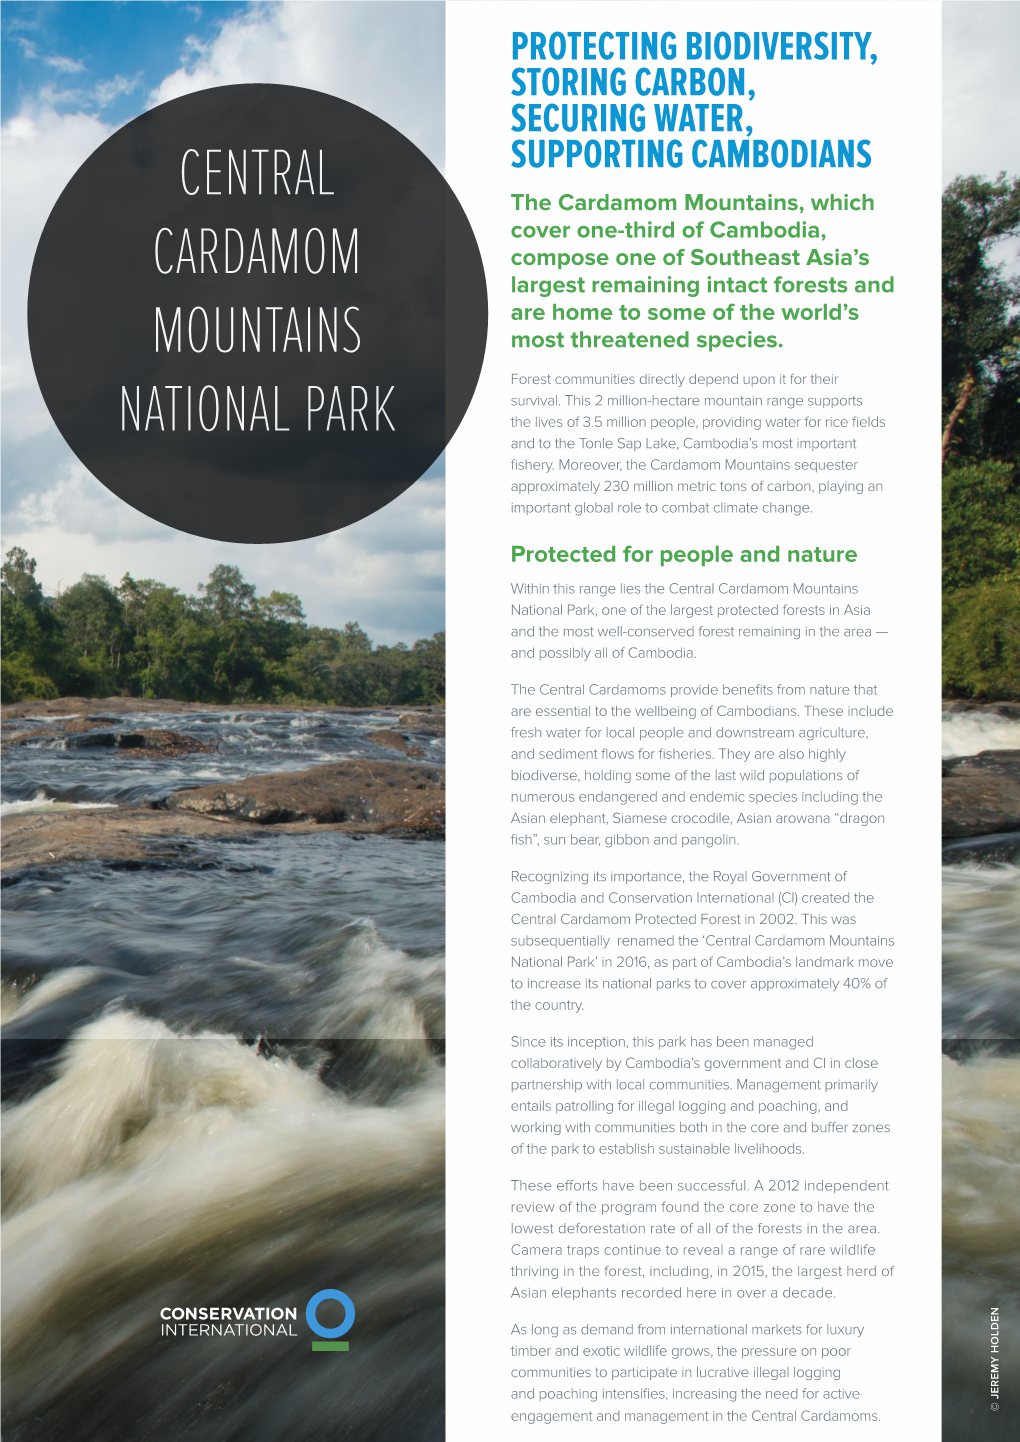 Central Cardamom Mountains National Park